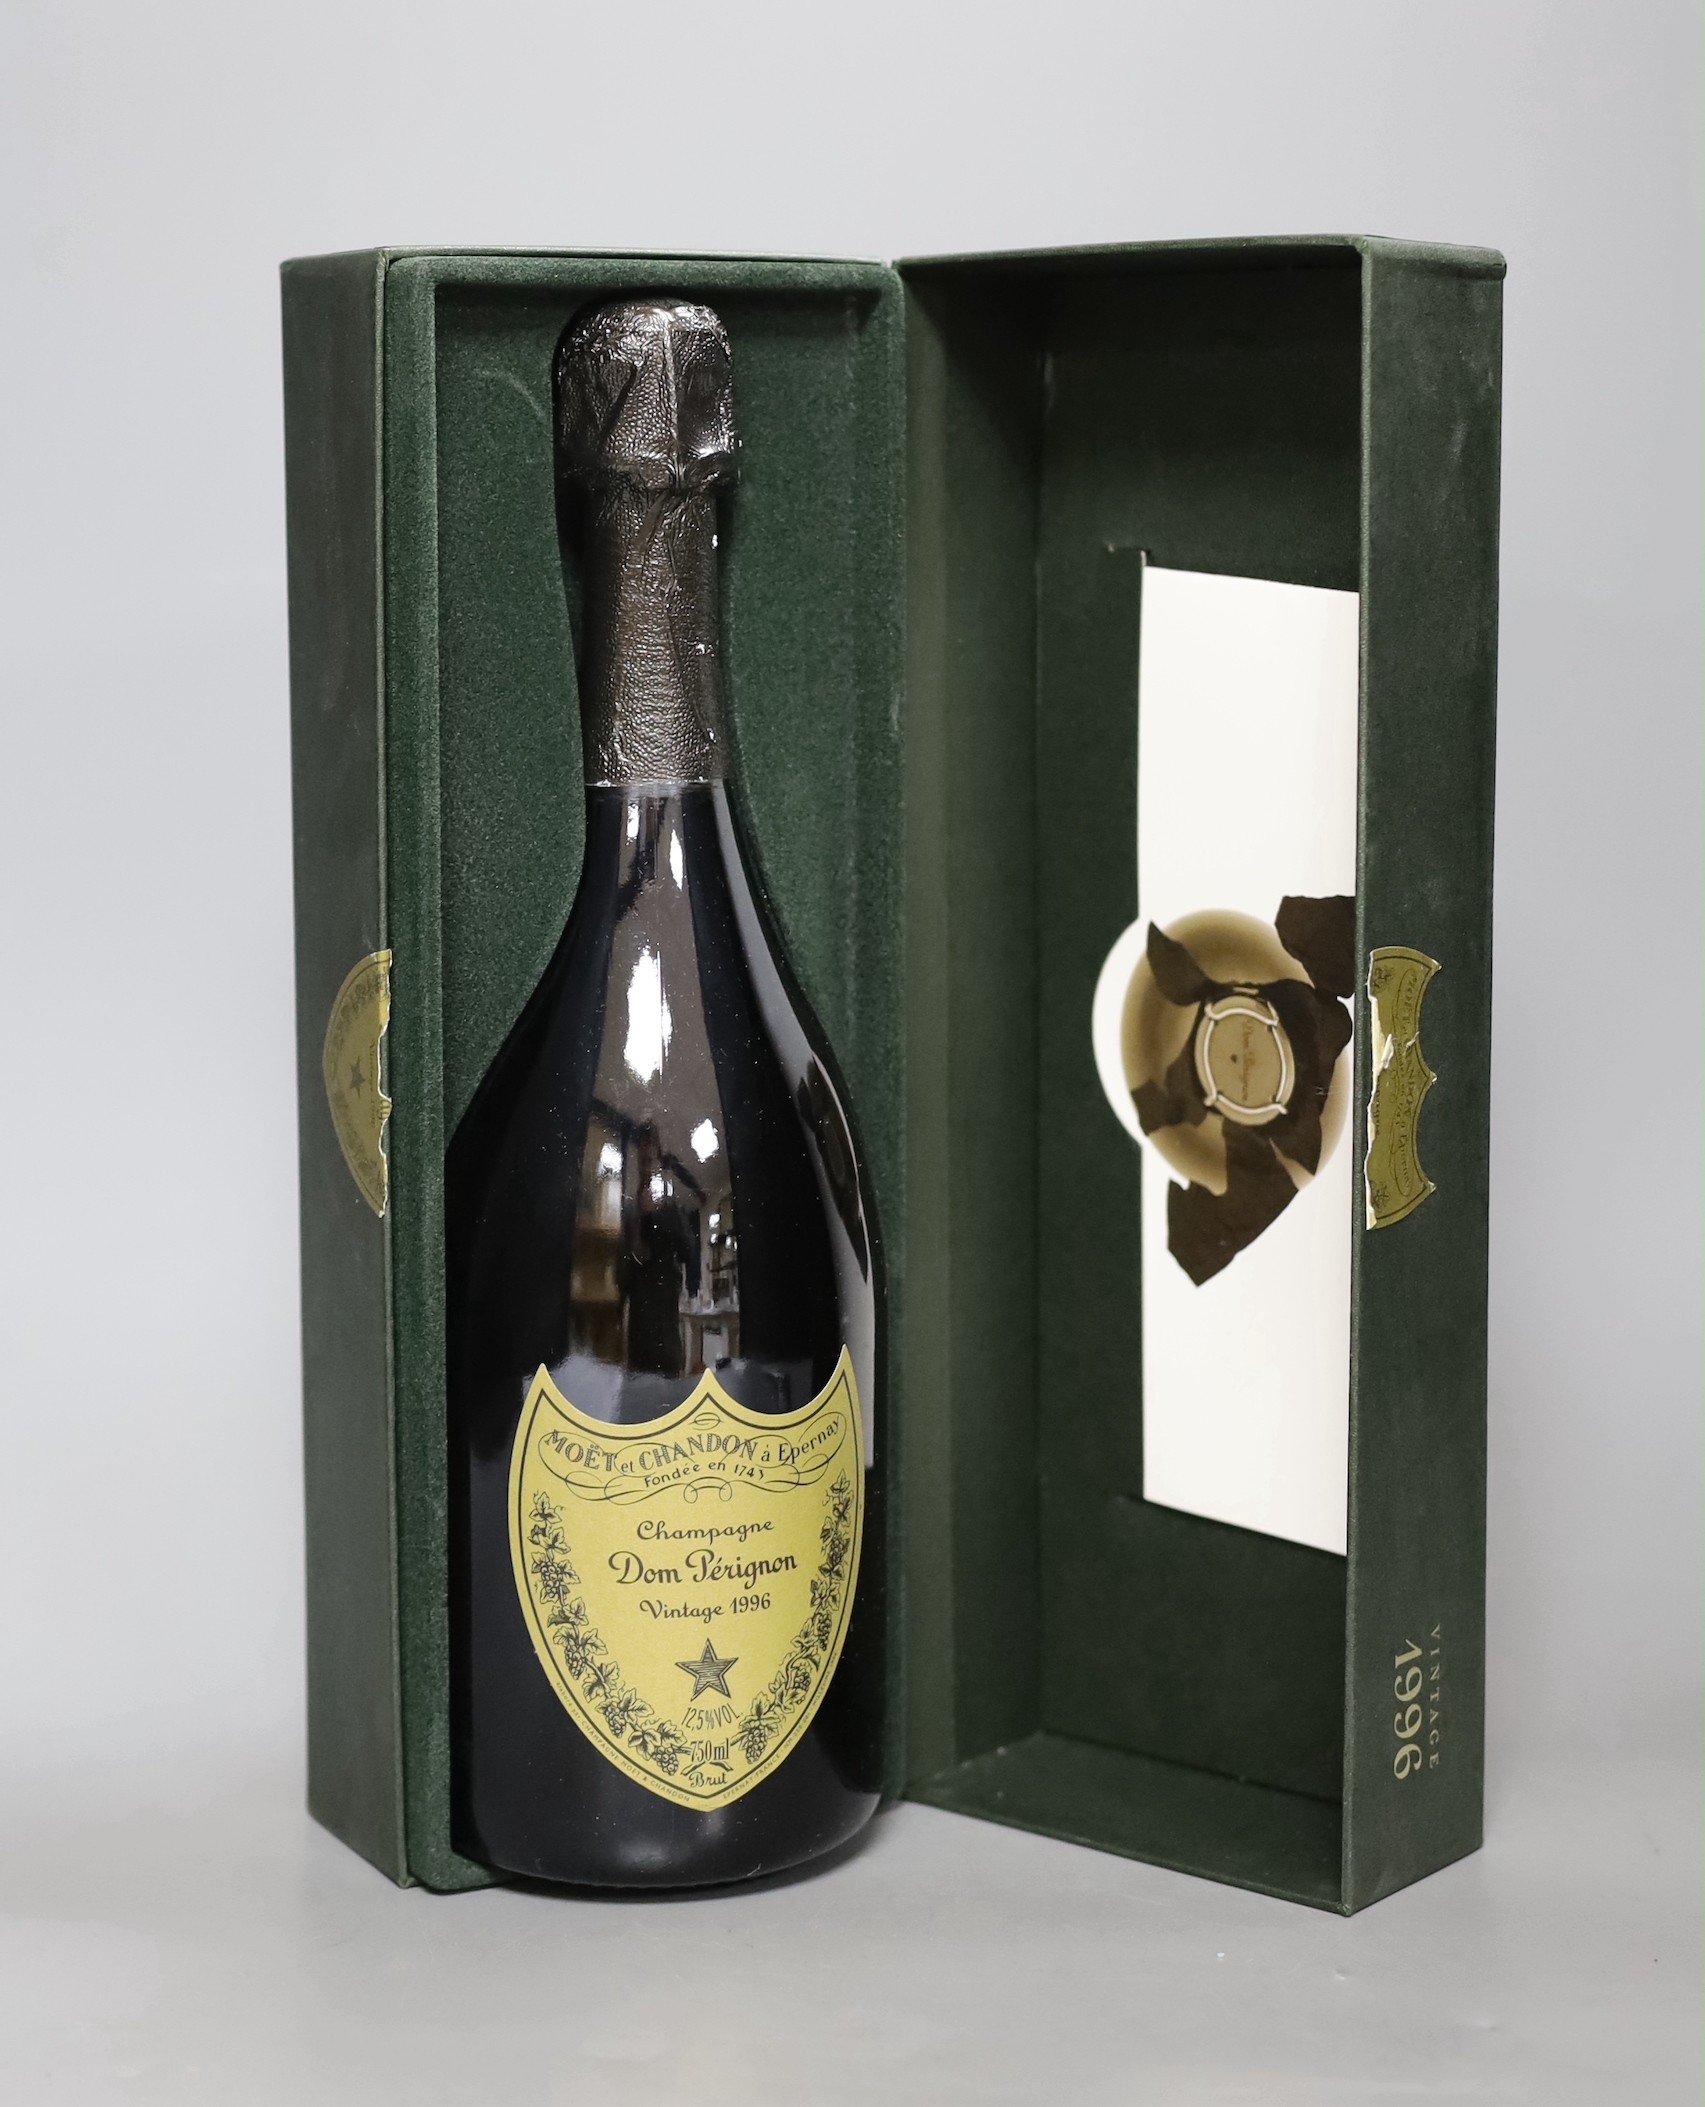 A cased bottle of Dom Perignon 1996 vintage Champagne.